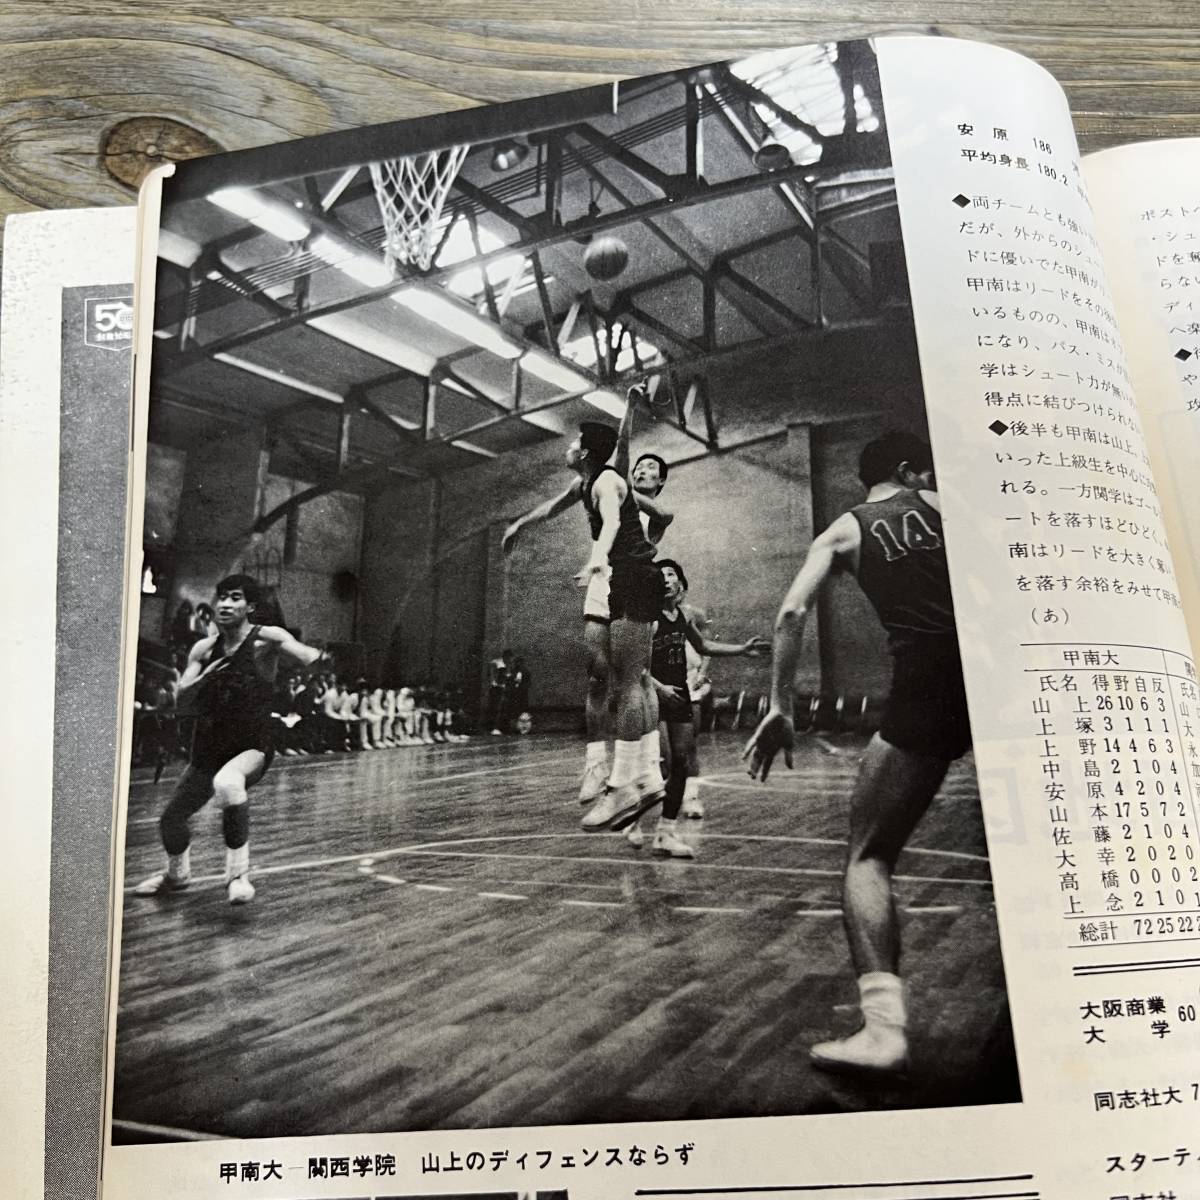 S-3121■月刊バスケットボール イラストレイテッド No.8 1968年11月30日■メキシコオリンピック 日本リーグ選手■BBIの画像6